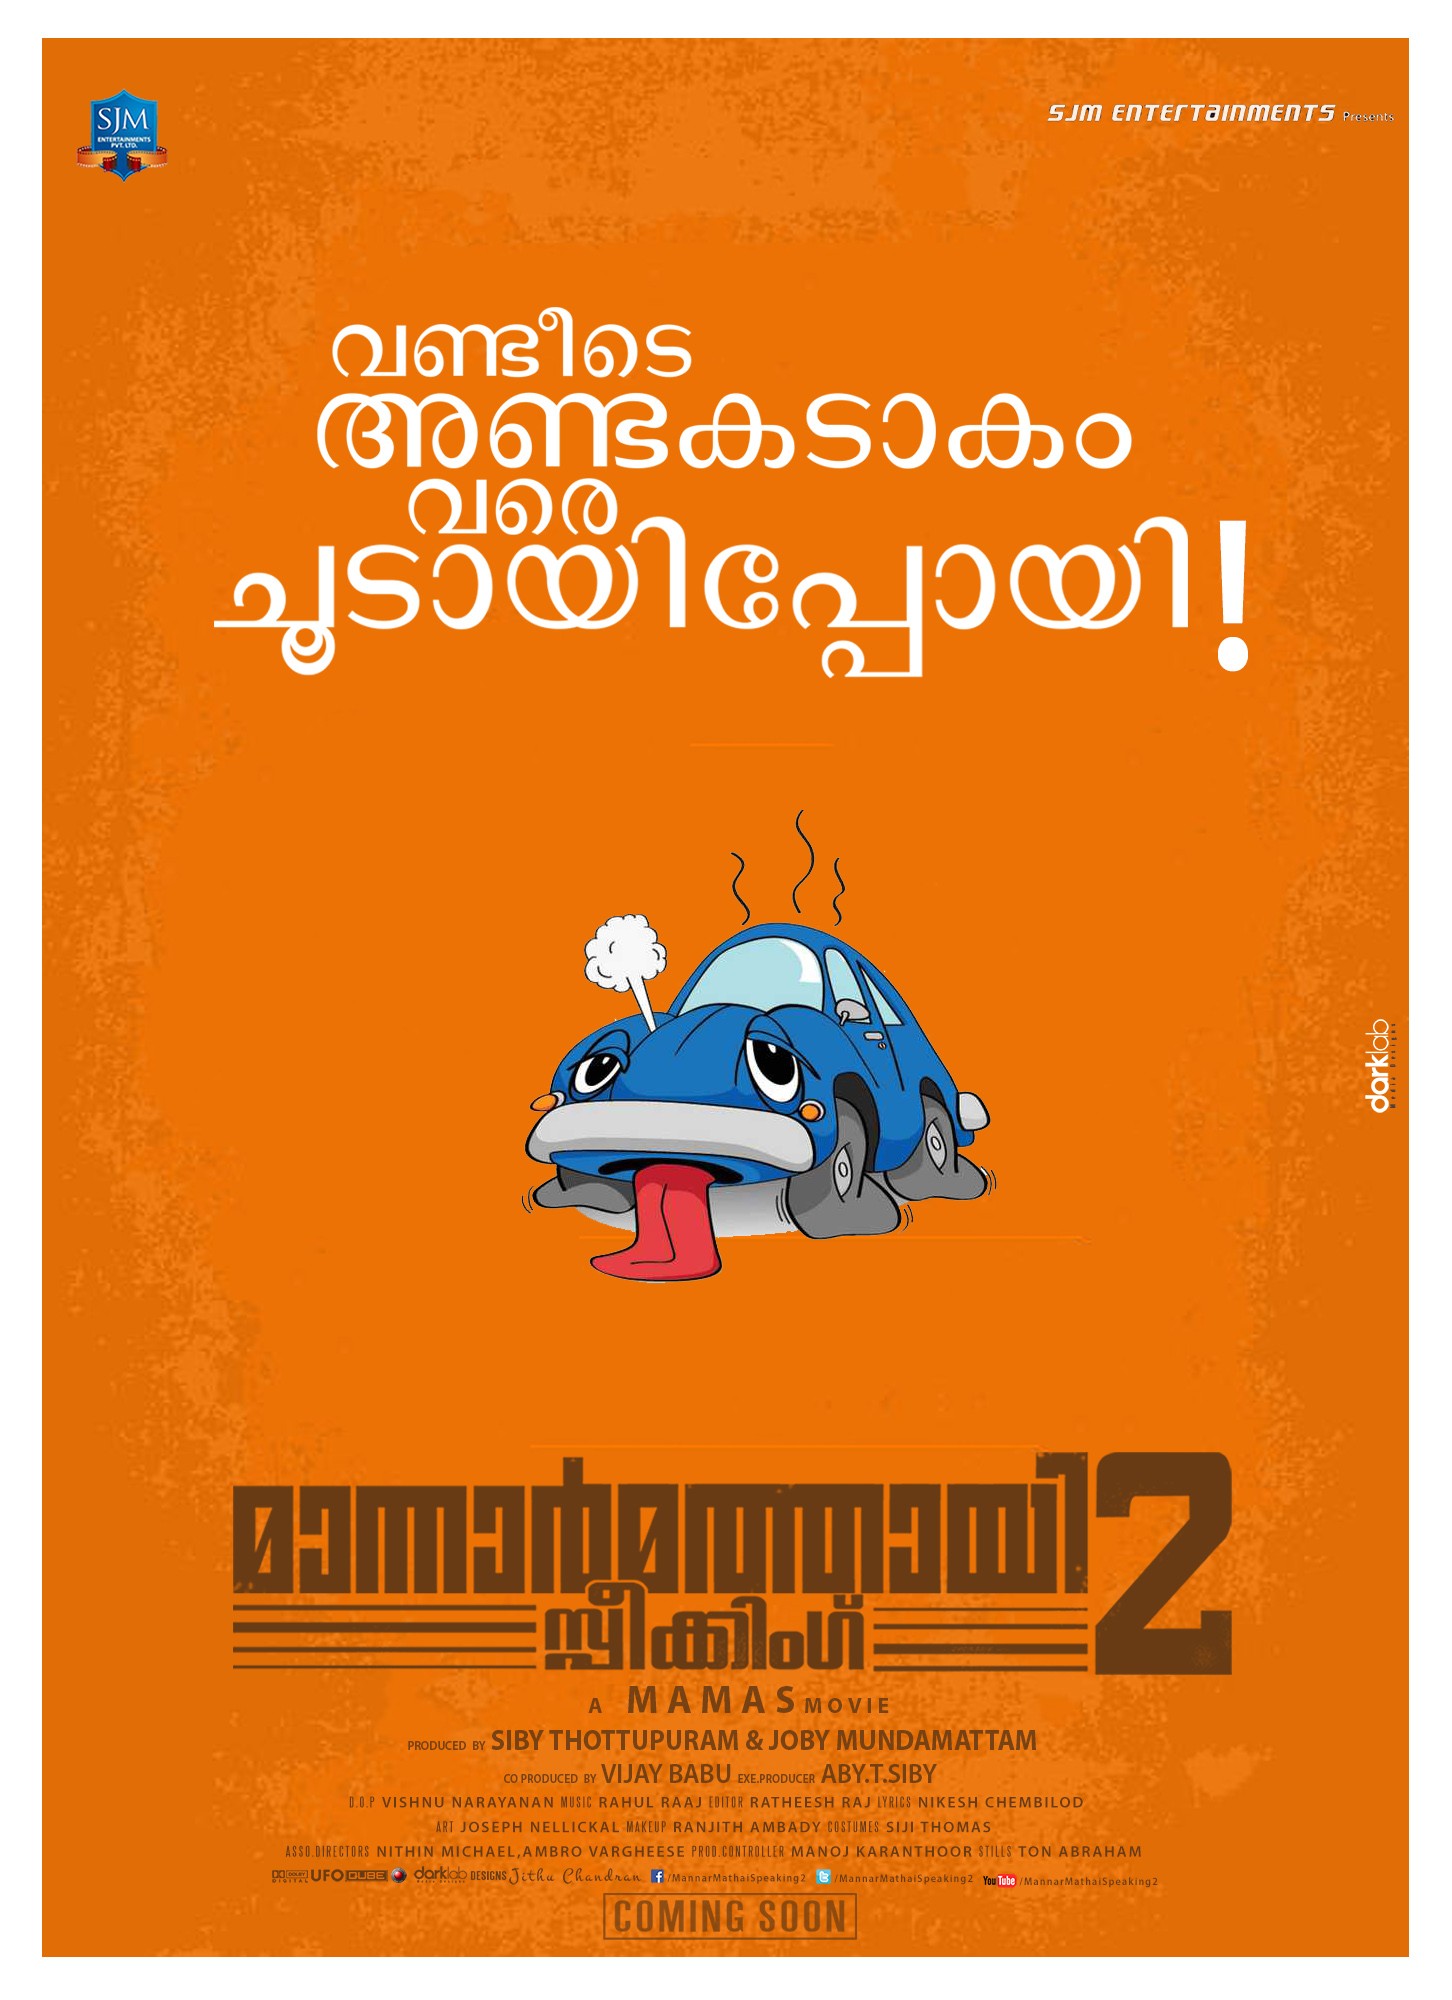 Mega Sized Movie Poster Image for Mannar Mathai Speaking 2 (#14 of 29)